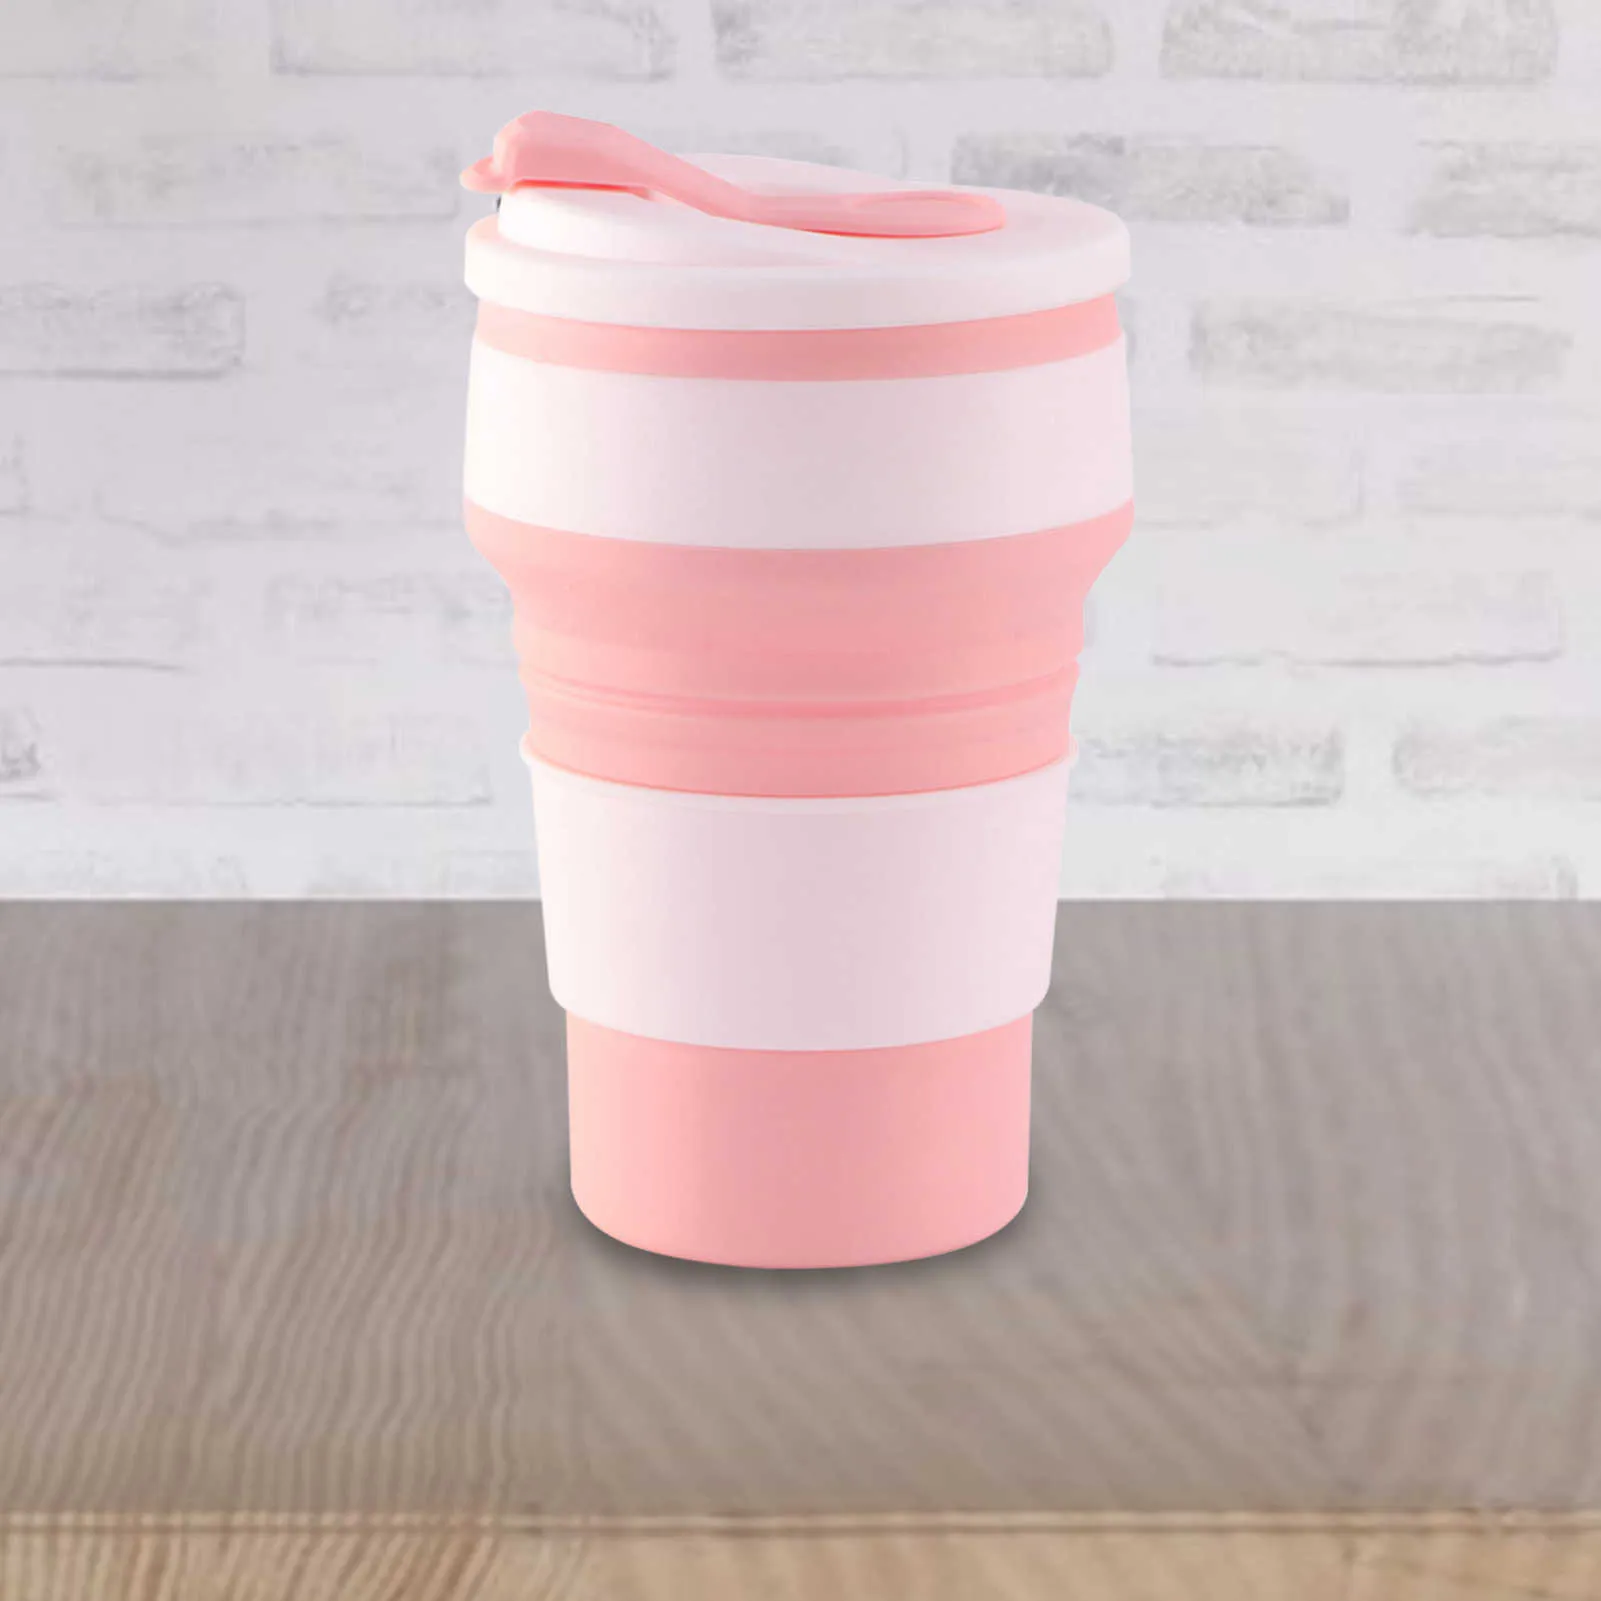 Outdoor Silikon Falten Wasser Tasse Mit Deckel Versenkbare Reise Mini Kaffeetassen Tragbare Gurgeln Copa Dropship Y0915